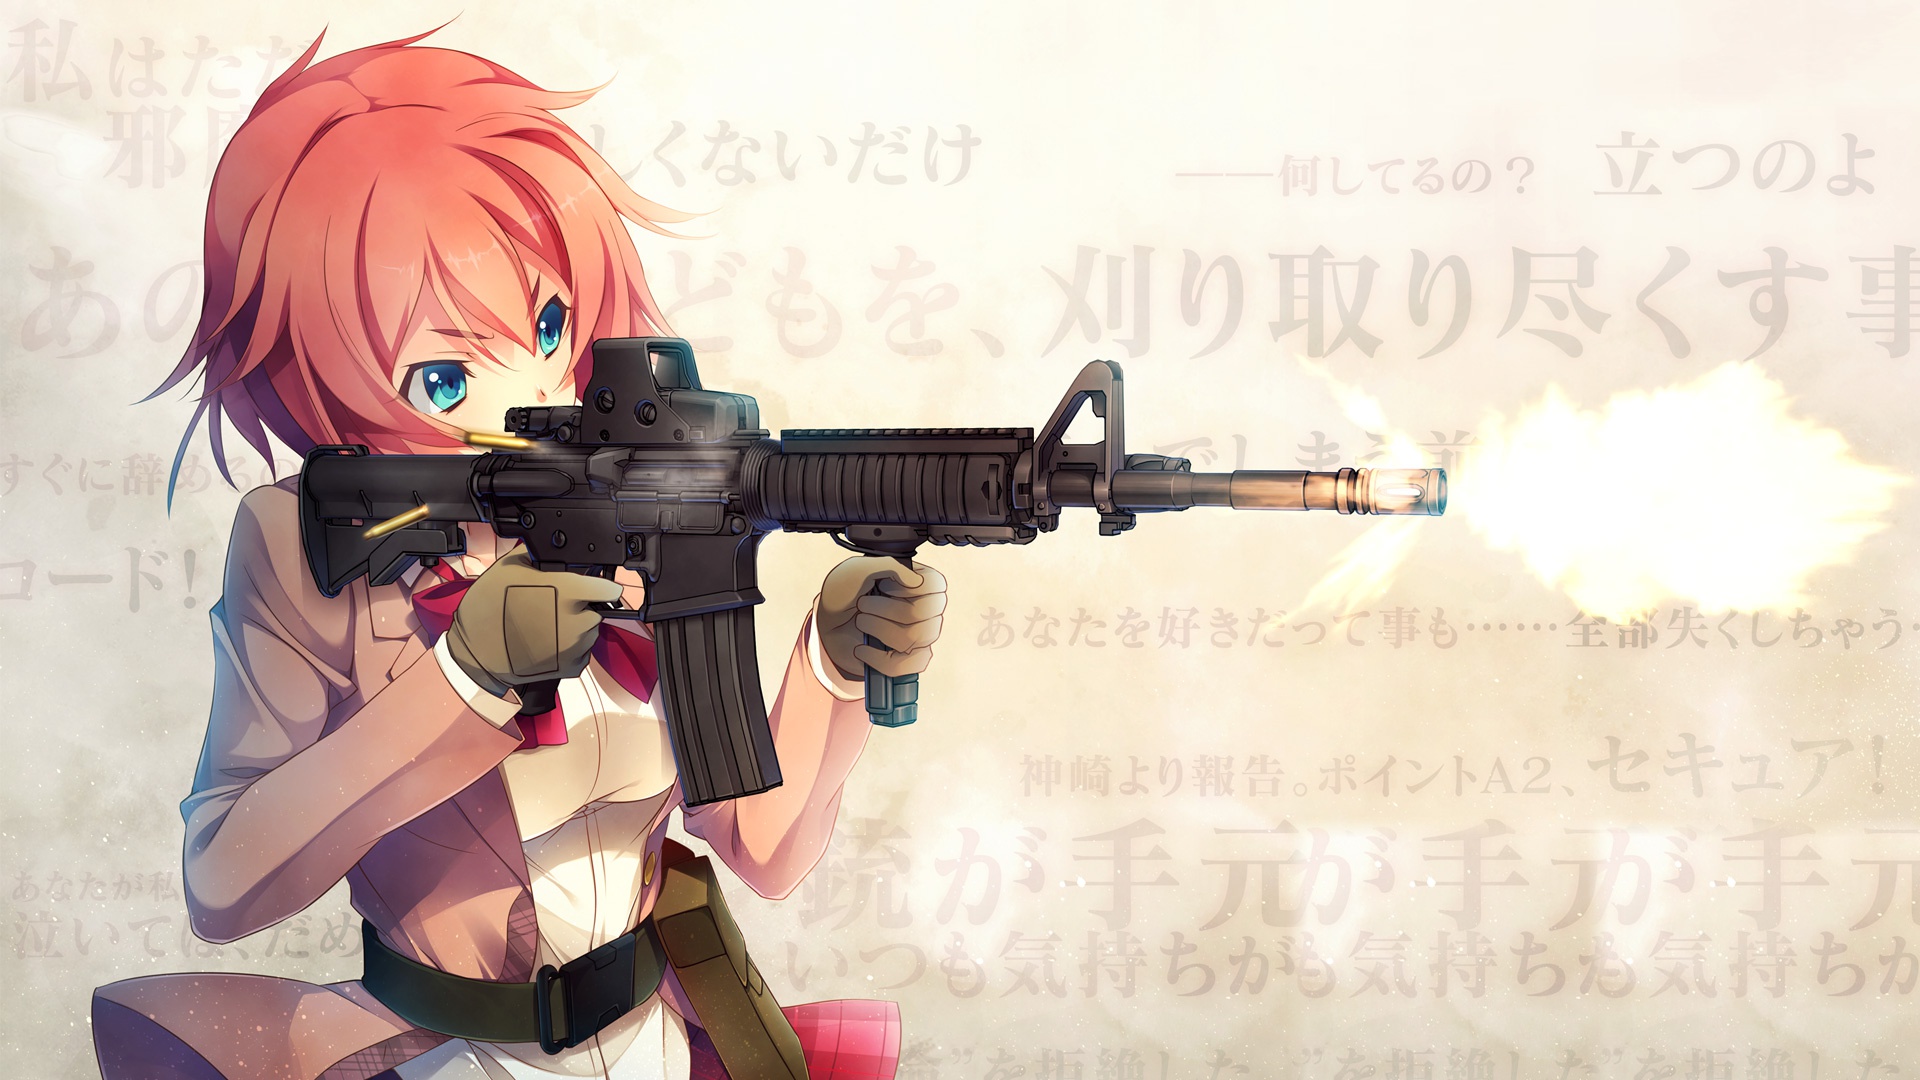 Anime Girls With Guns Hd Wallpaper Id54454 - Anime Girls With Guns Wallpaper Hd - HD Wallpaper 